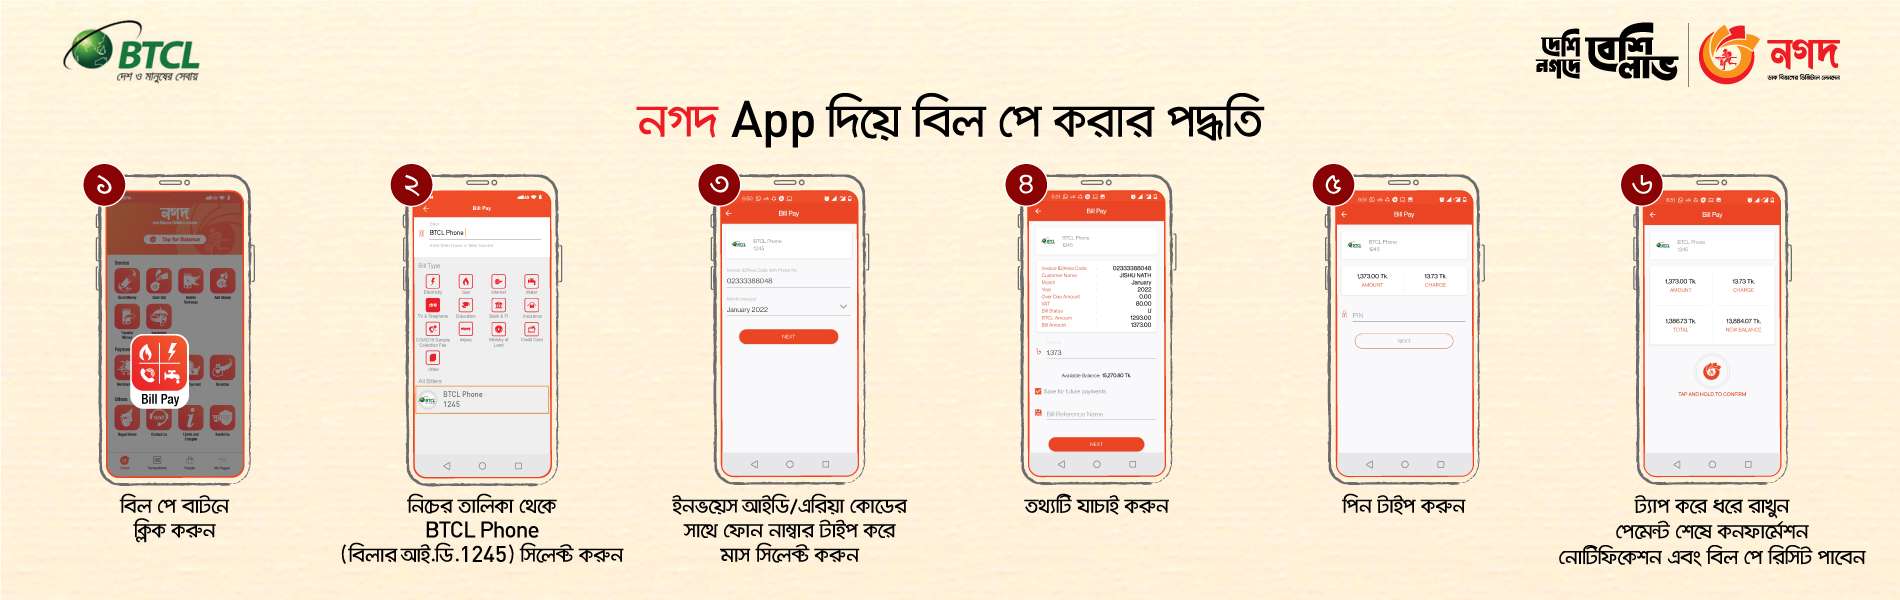 Online Payment using nagad app